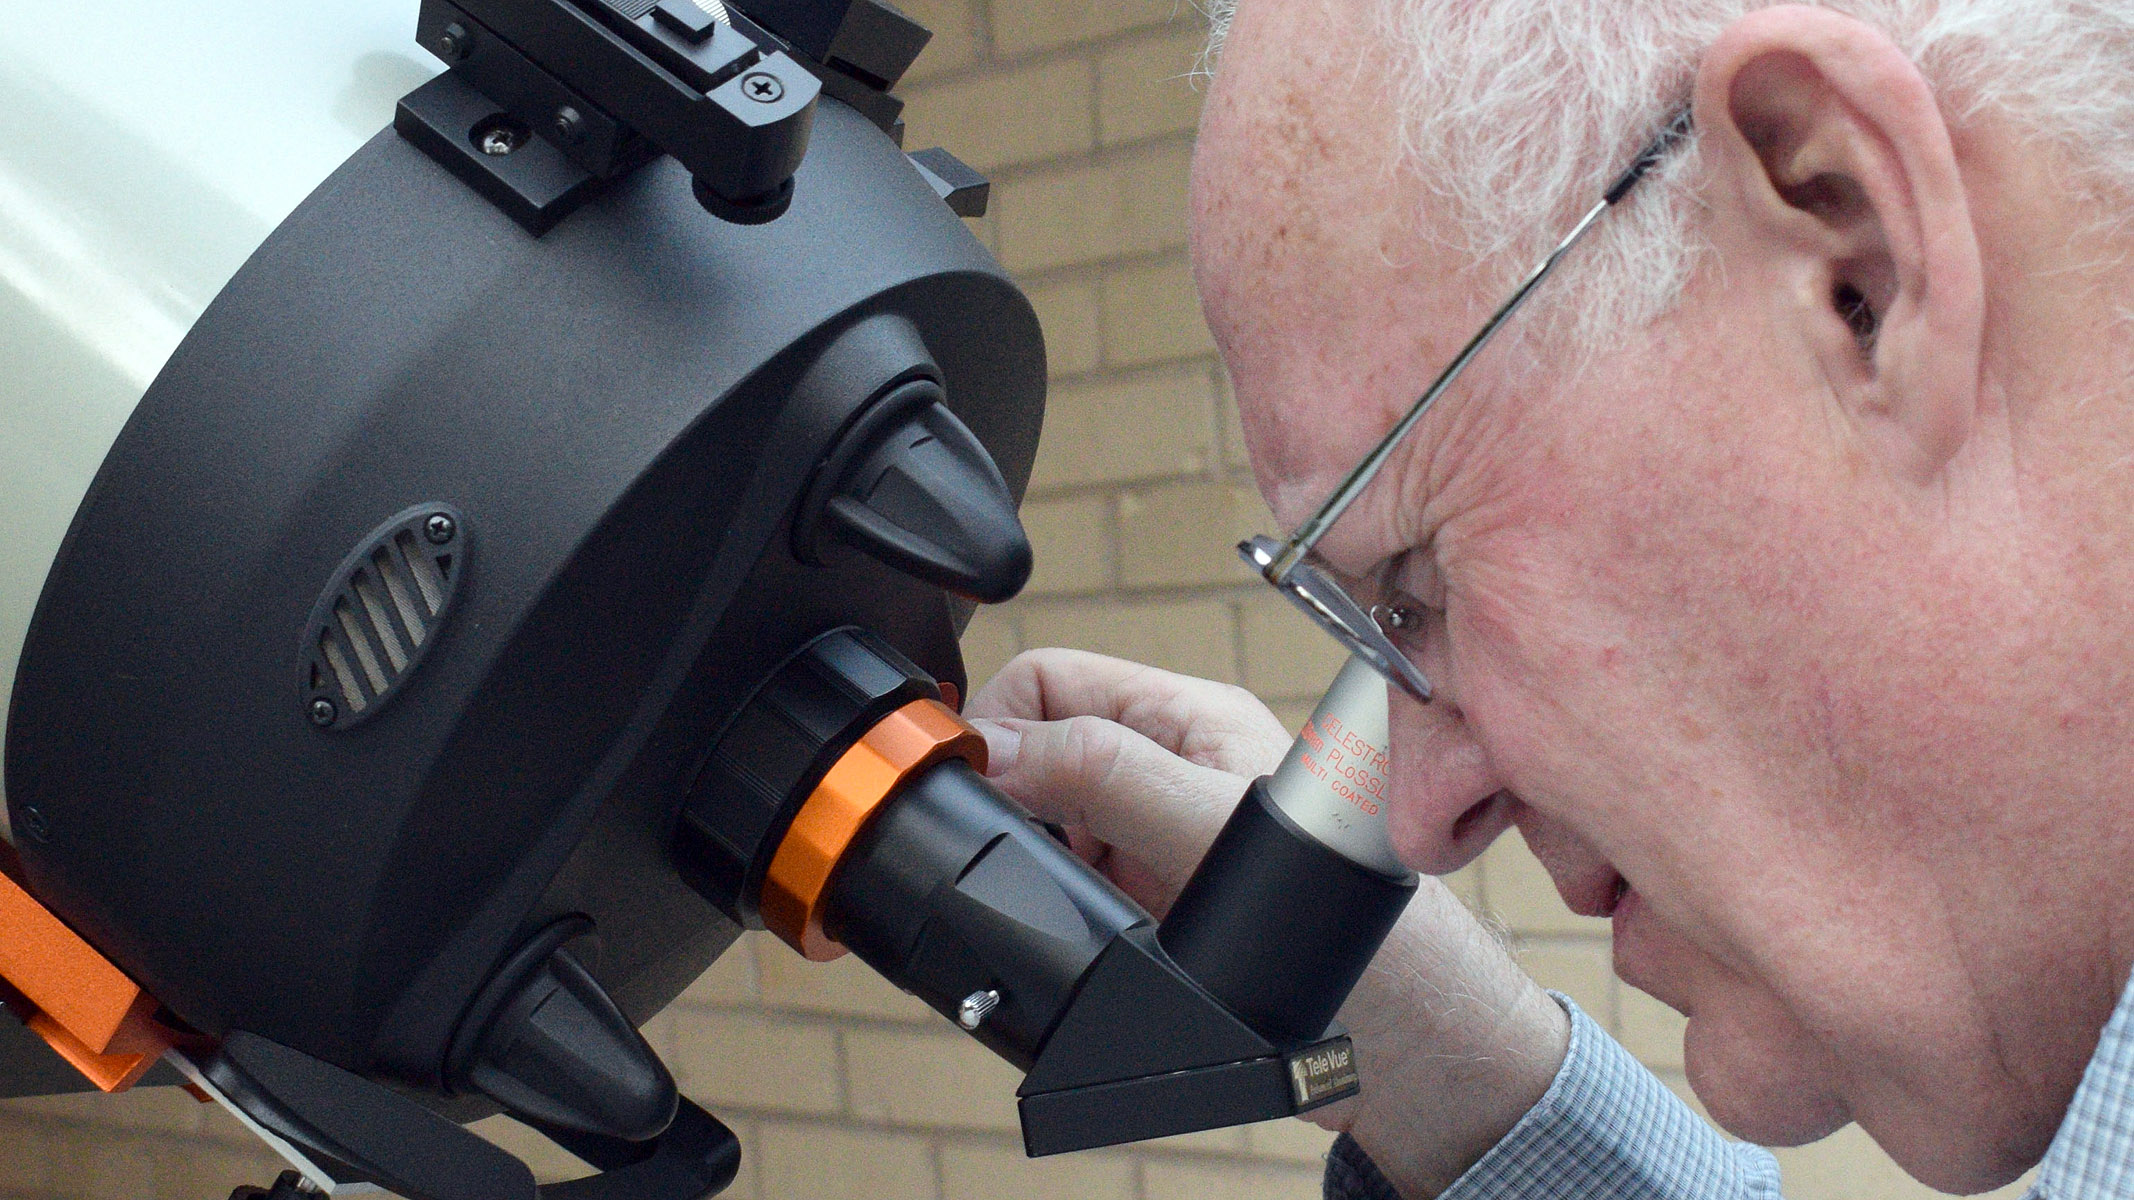 Author looking through eyepiece on the Celestron advanced telescoped